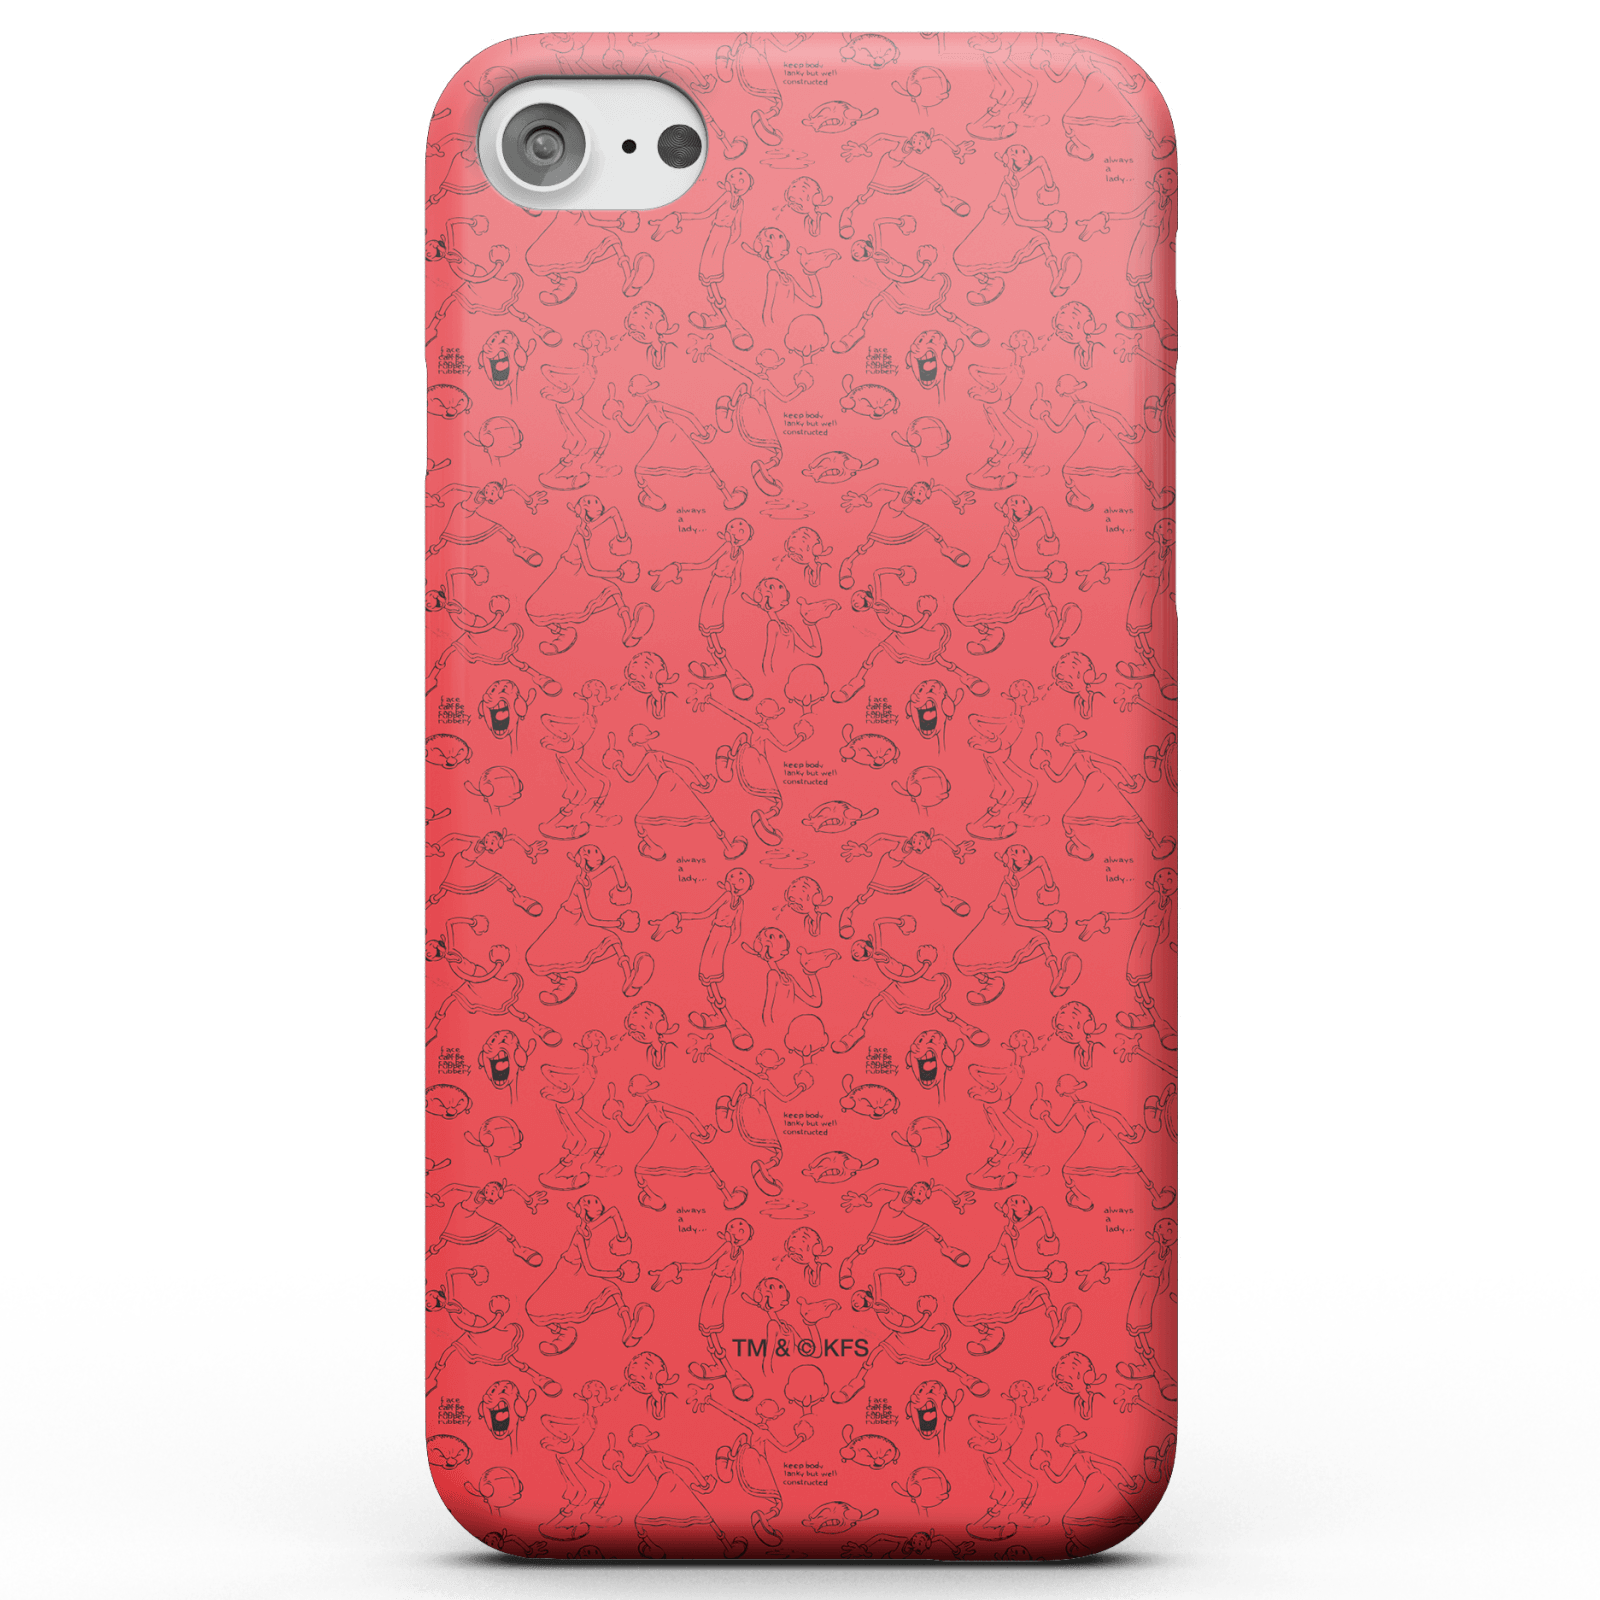 Funda Móvil Popeye Olivia Oyl para iPhone y Android - iPhone 6 Plus - Carcasa doble capa - Brillante